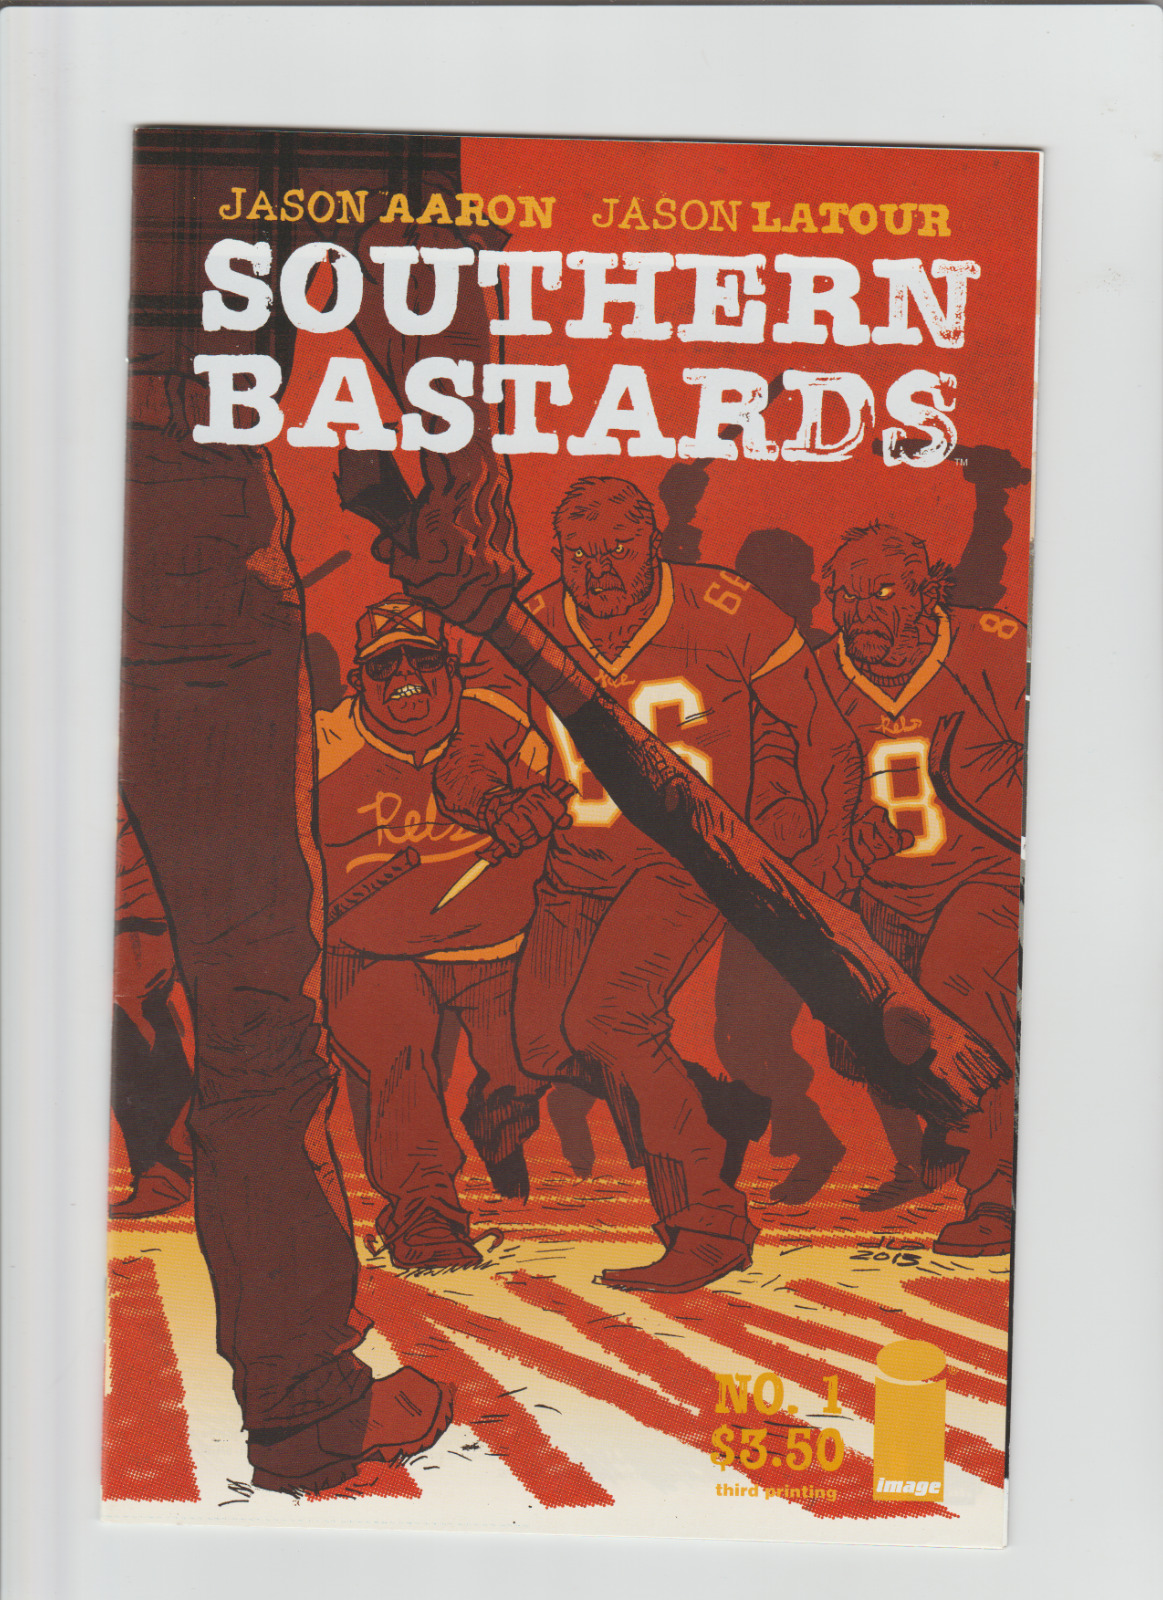 SOUTHERN BASTARDS 1-13 FULL RUN LOT (Image Comics) Jason Aaron MANY FIRST APP